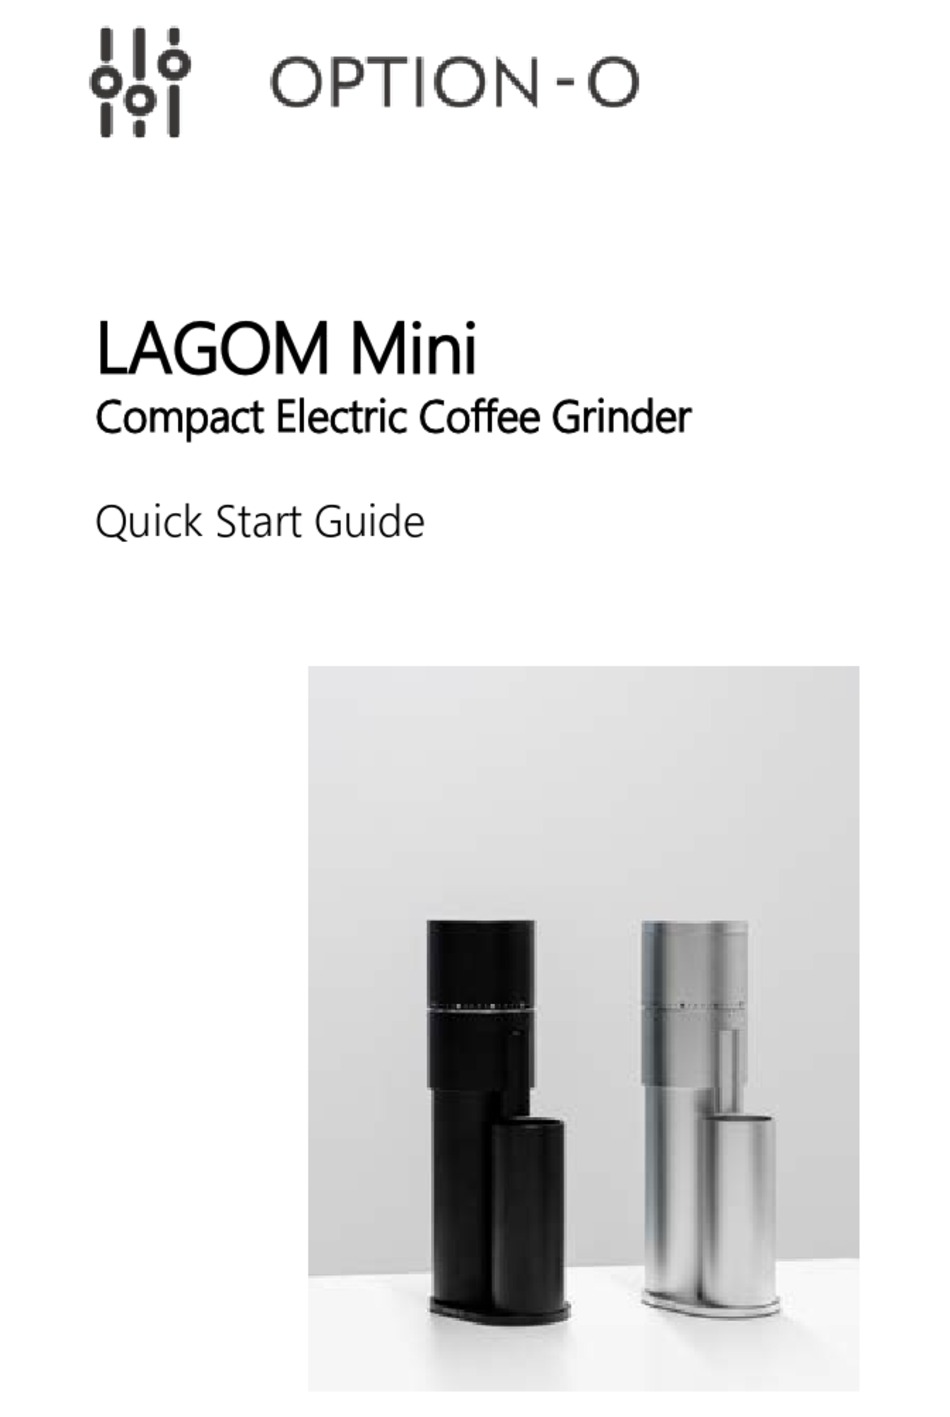 Option-O Lagom Mini Compact Electric Coffee Grinder